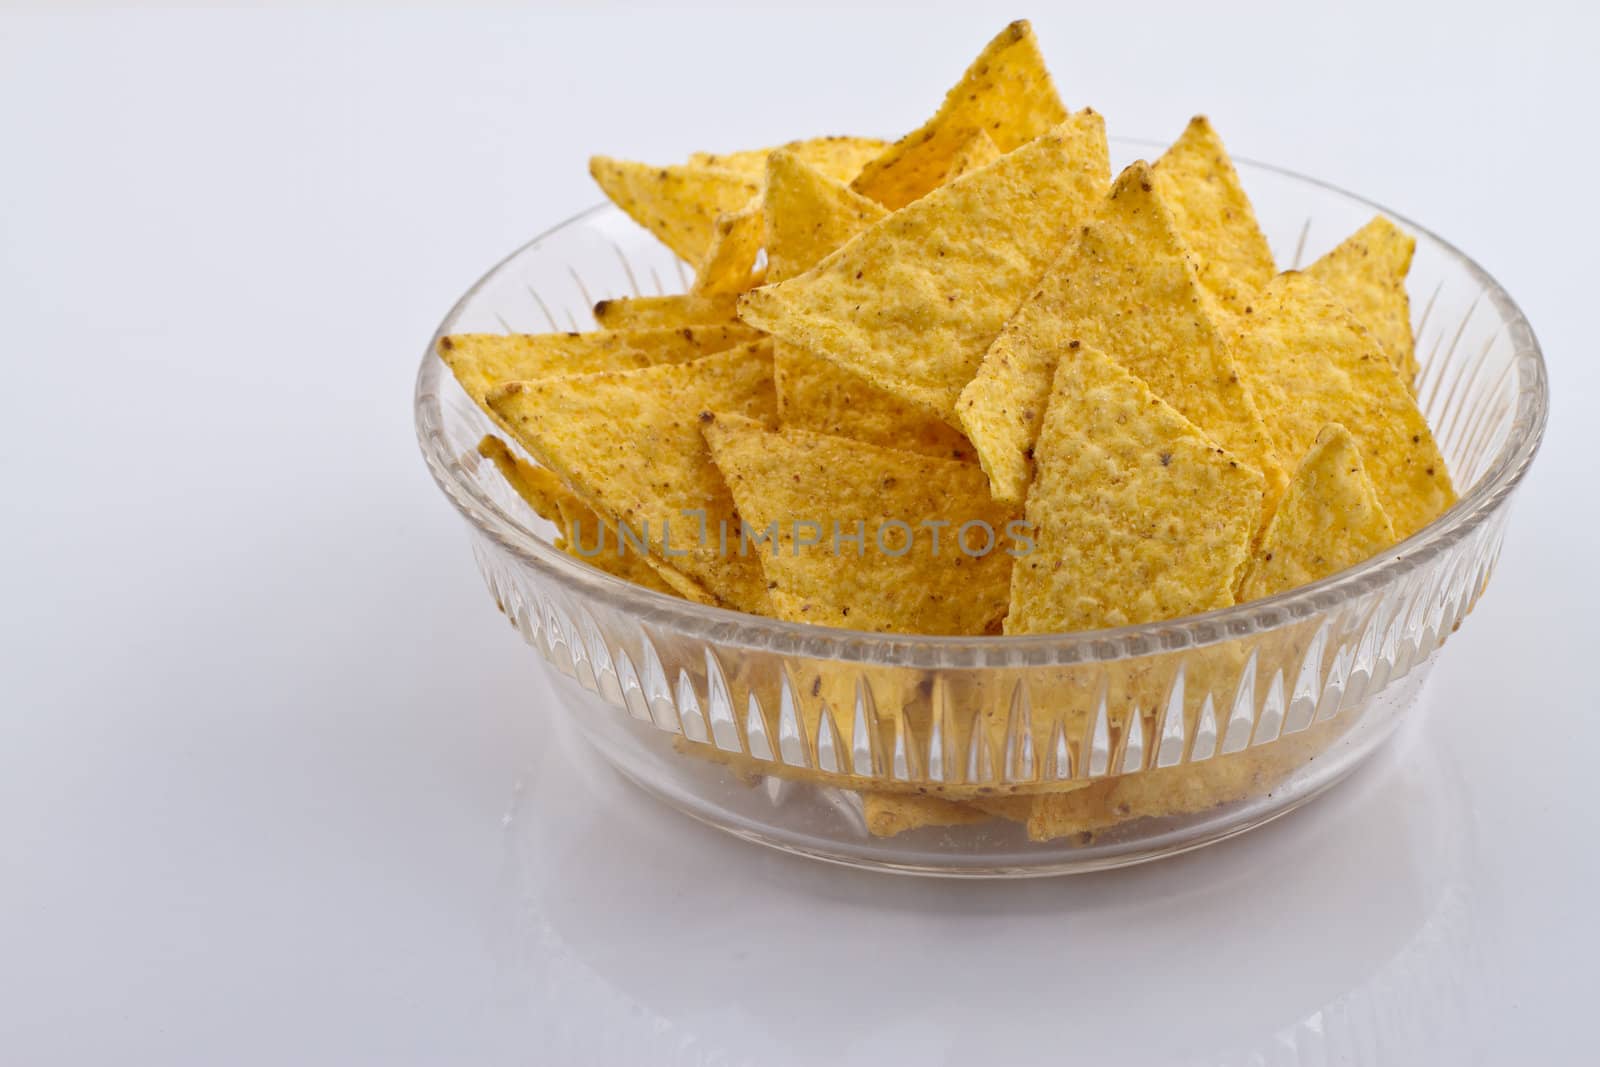 Glass bowl of nachos on white reflecting surface